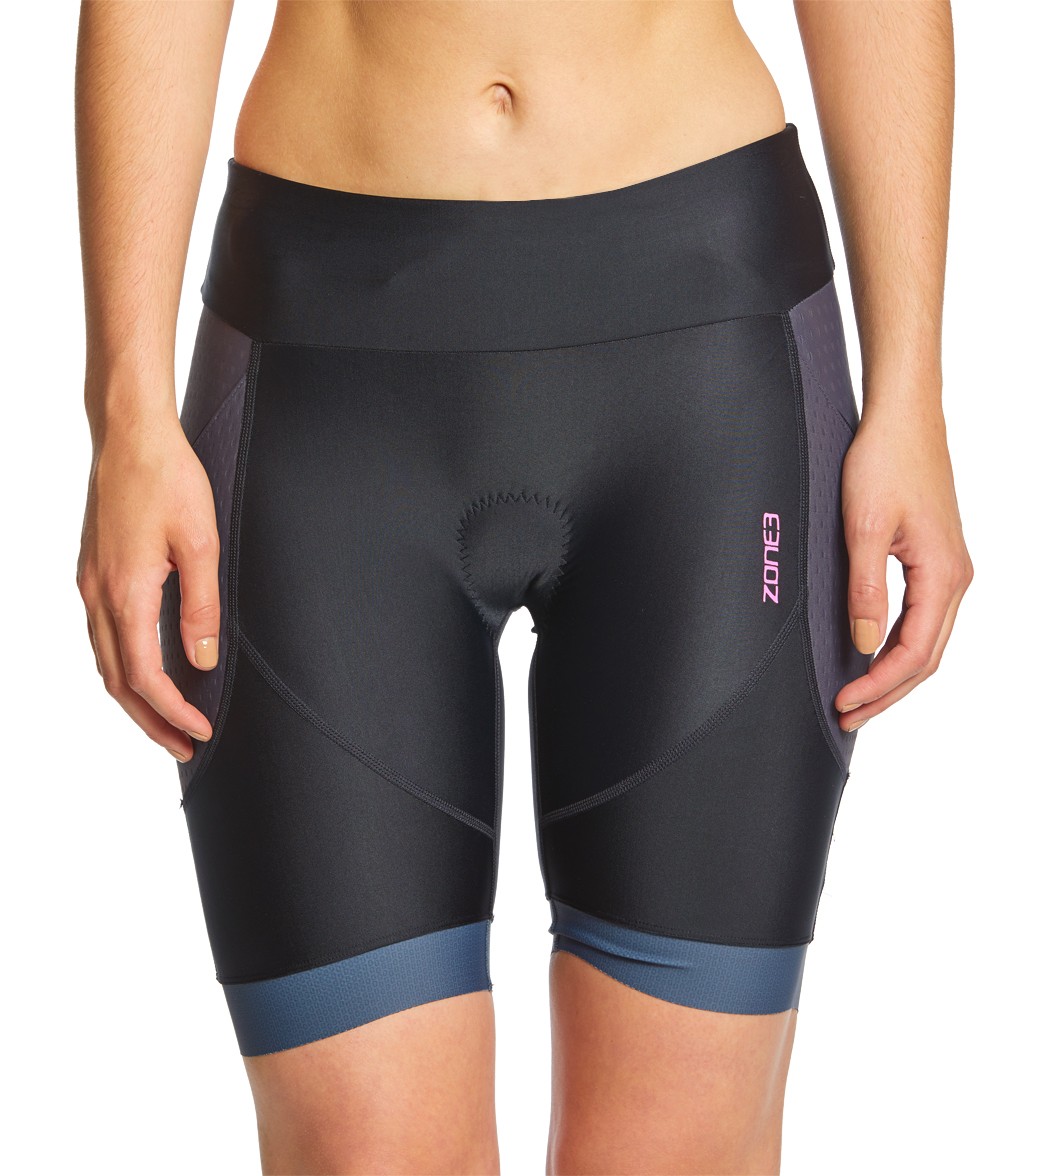 Zone3 Women's Aquaflo Plus Tri Shorts - Black/Grey/Neon Pink Medium - Swimoutlet.com